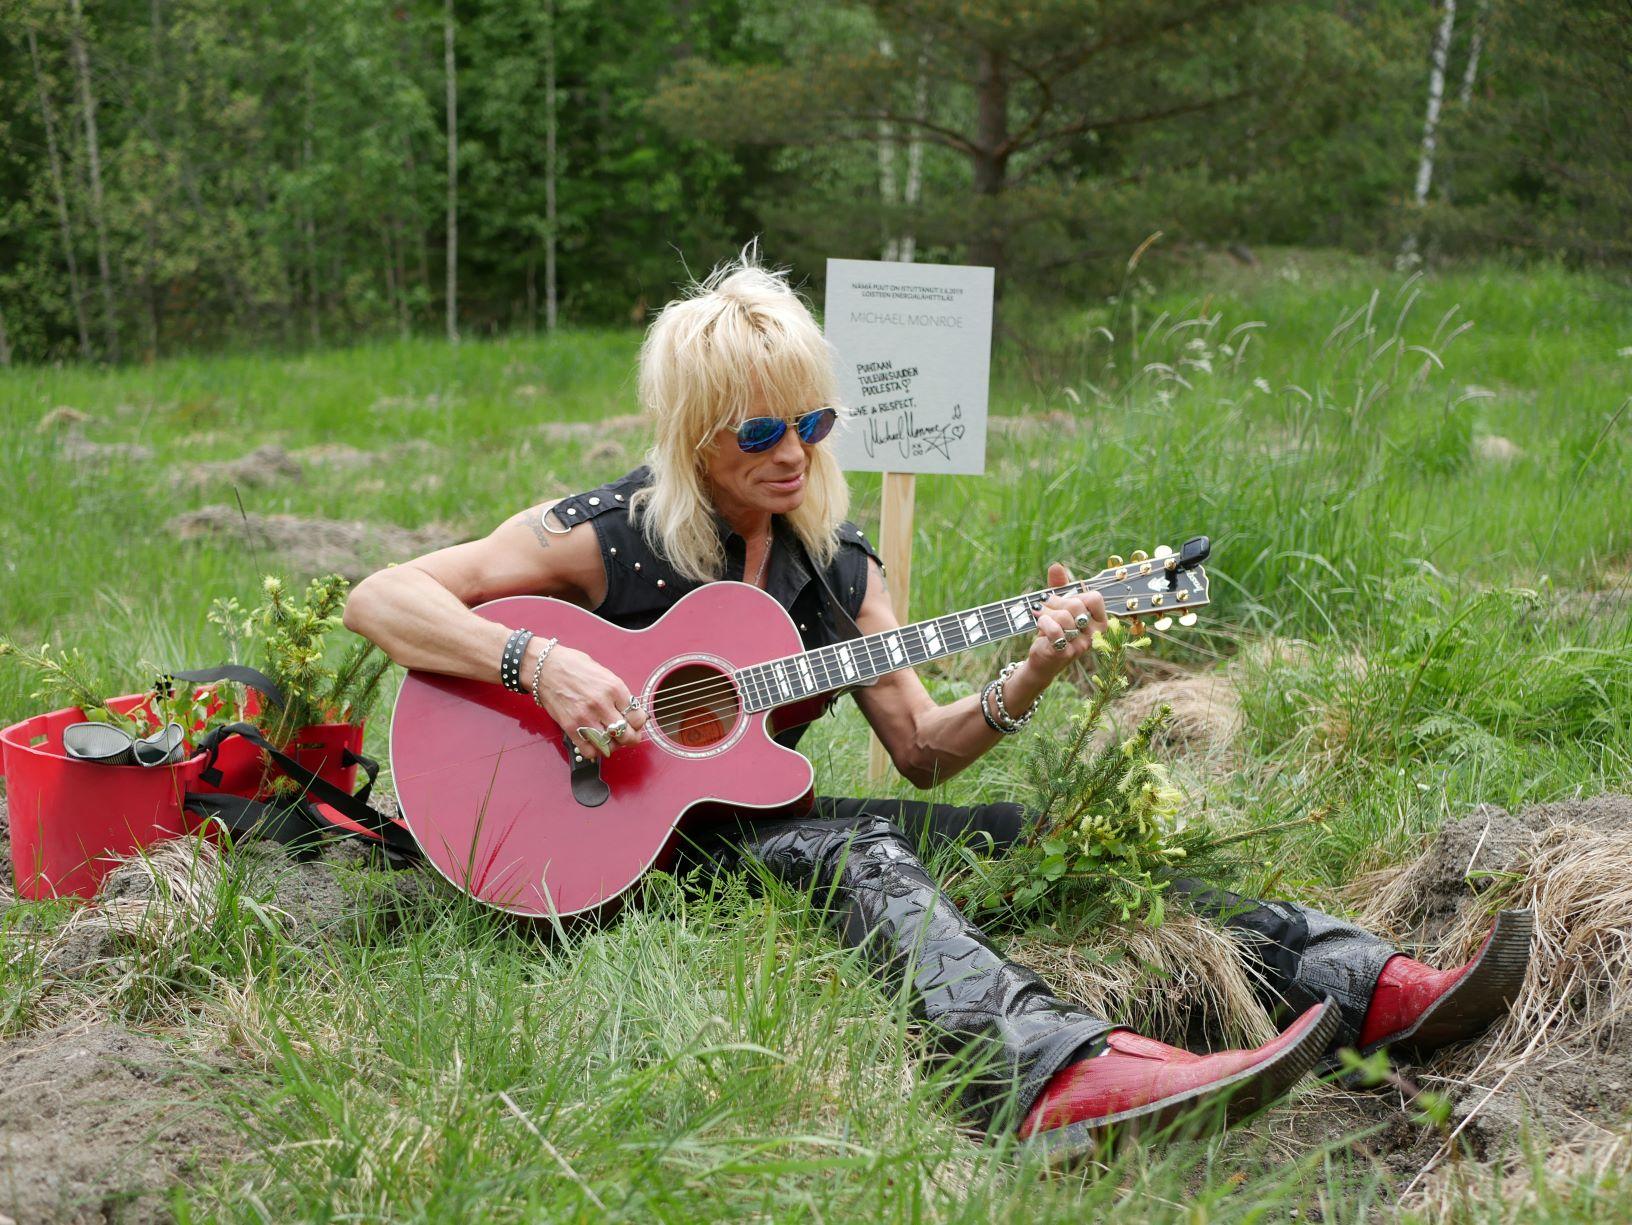 Rockartisten Monroe sitter i gräset